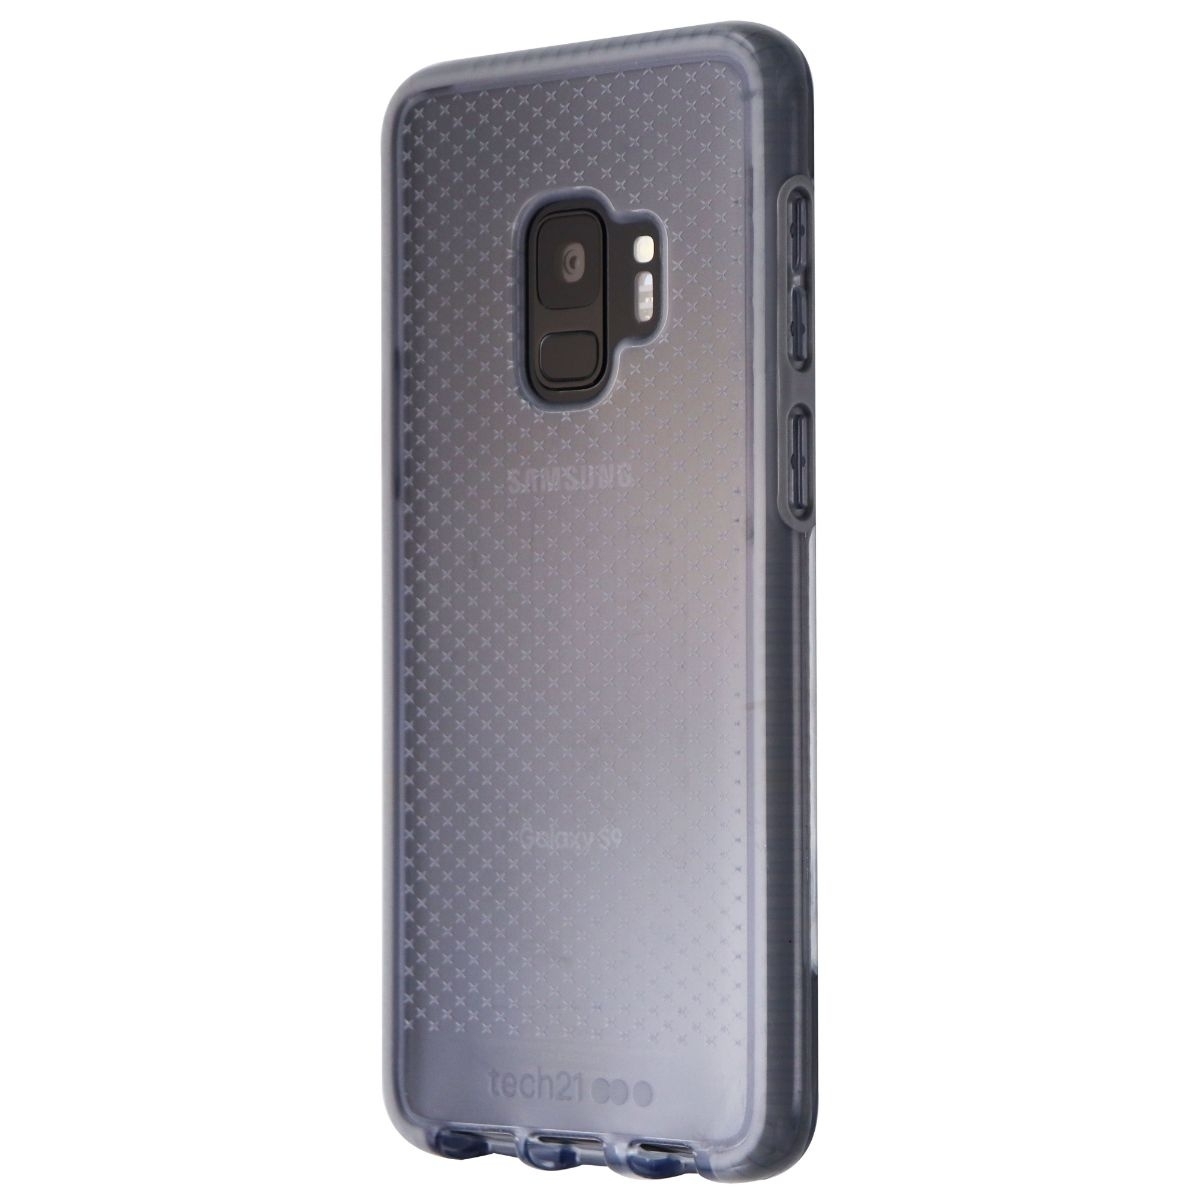 Tech21 Evo Check Series Gel Case For Samsung Galaxy S9 - Mid-Gray